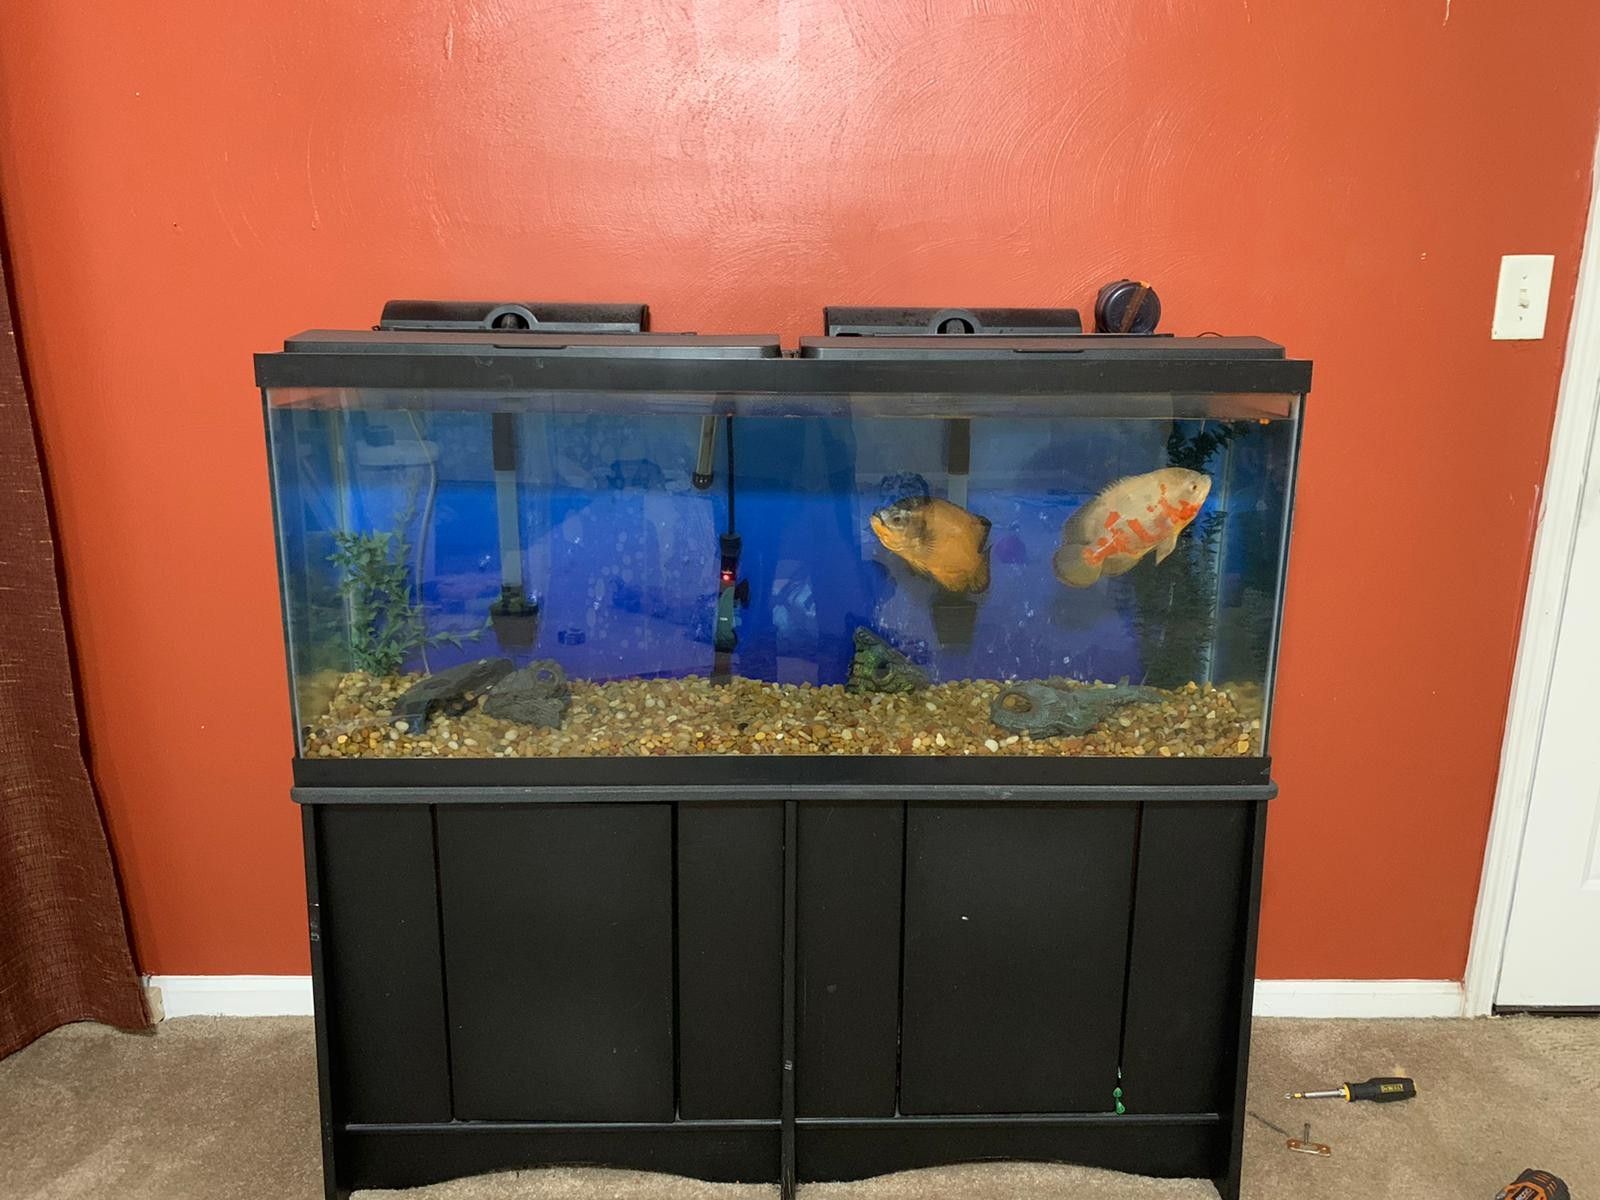 55 Gallon Fish Tank kit along with 2 Ocar Fish!